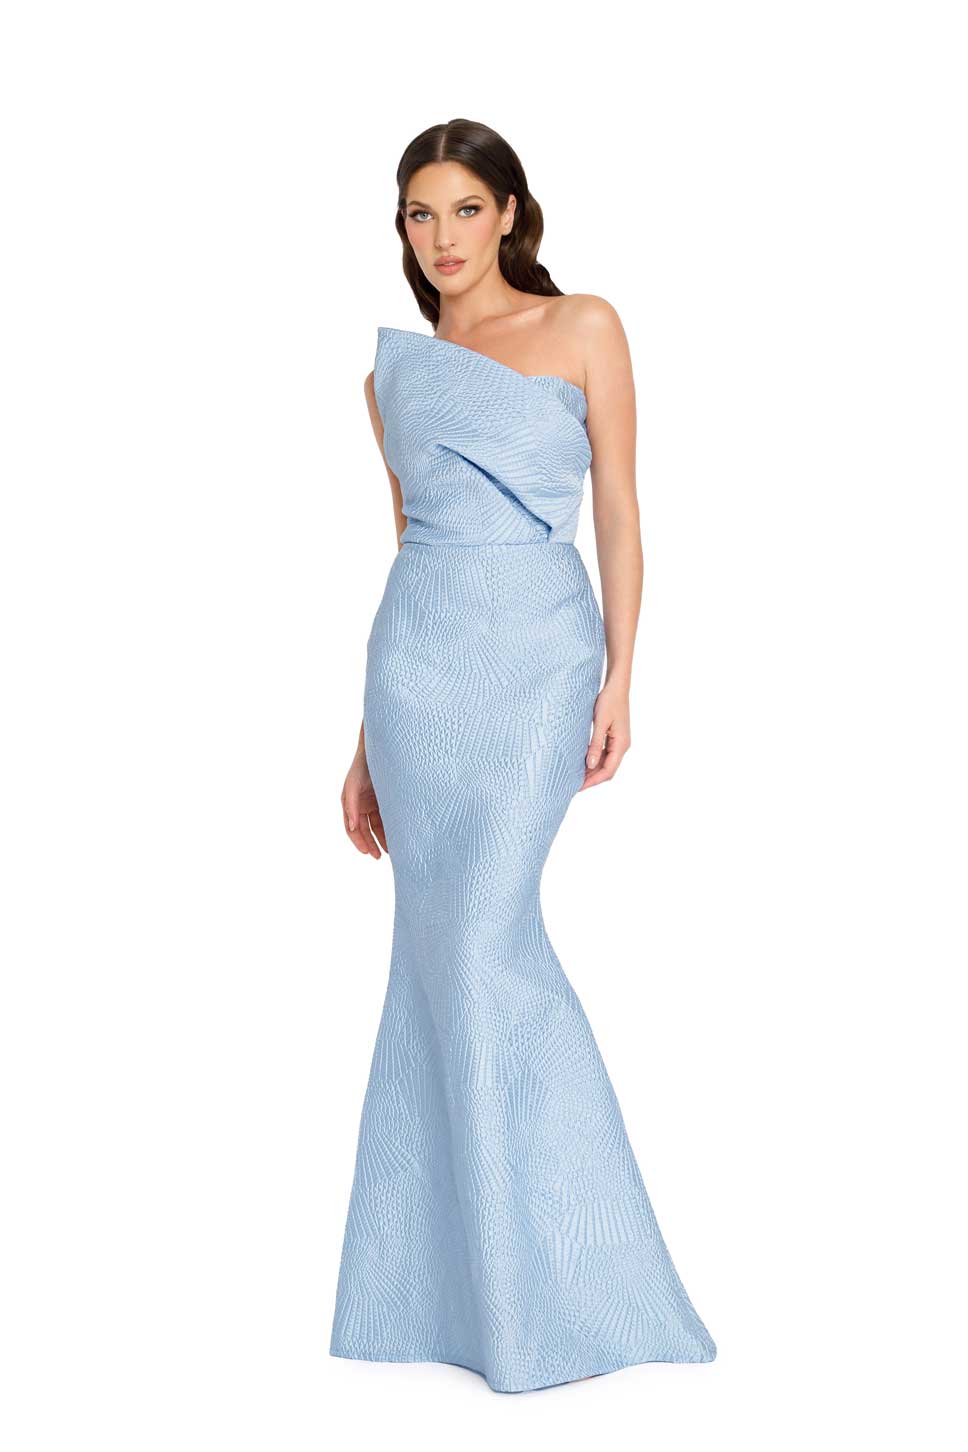 Pale blue strapless bridal gown, al-helena